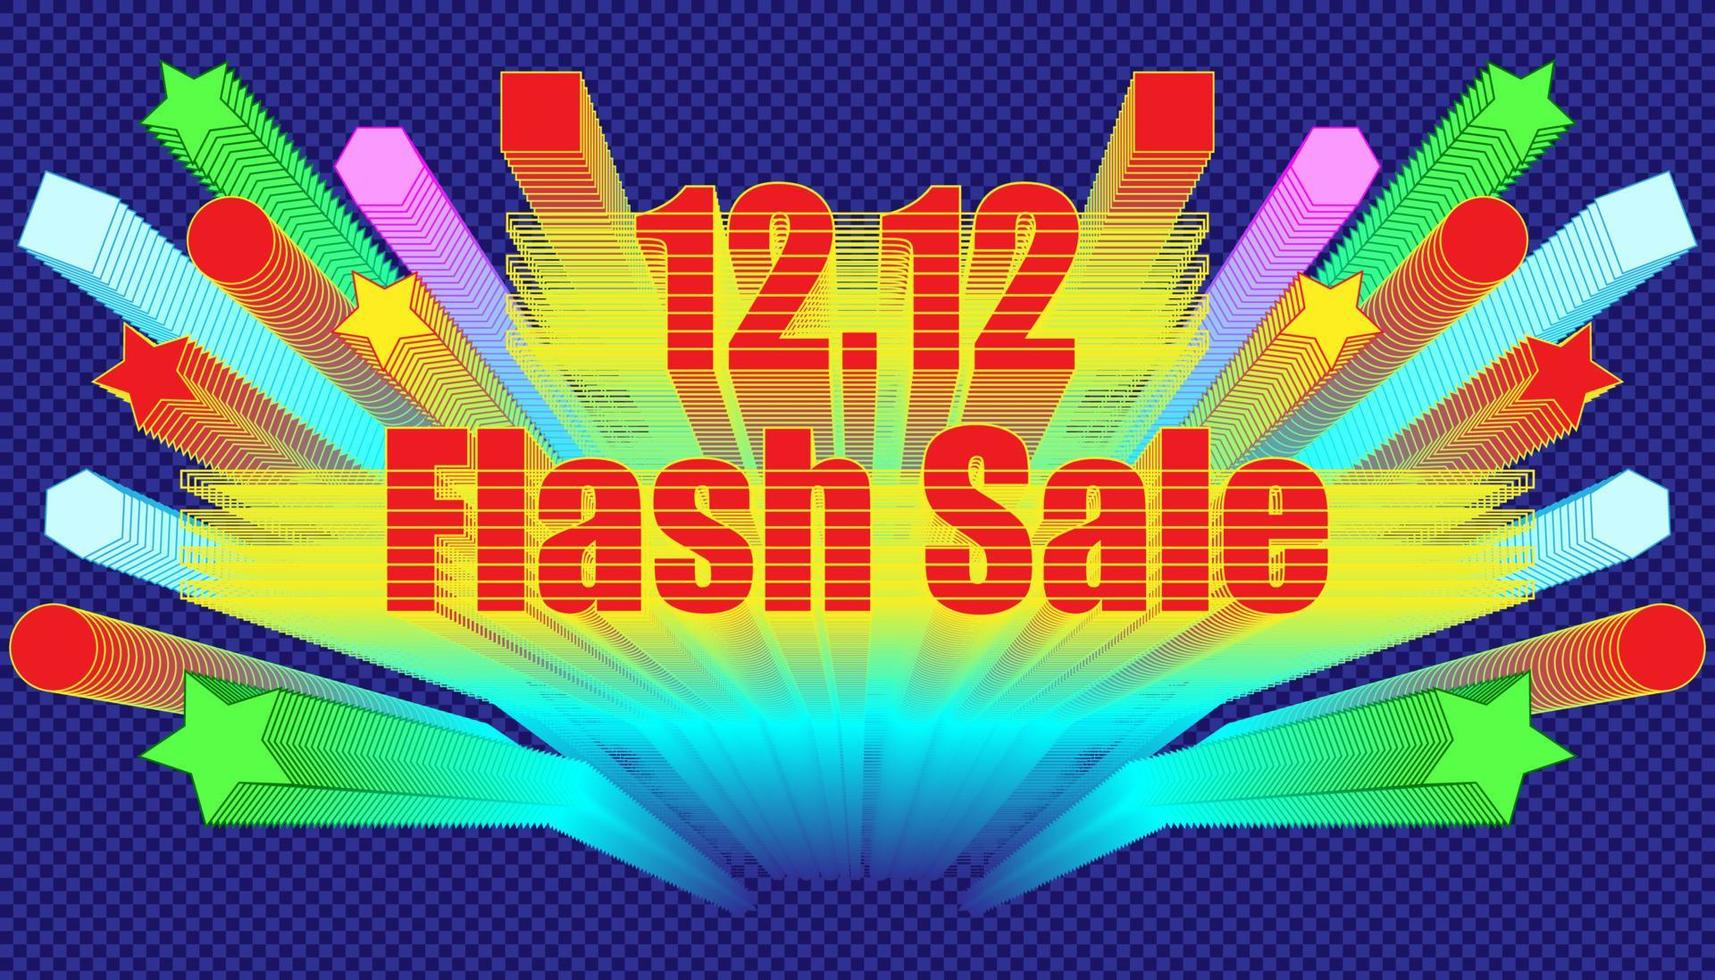 12.12 flash sale-effect mix retro-stijl. geruite blauwe kleur achtergrondstijl. vector illustratie eps10